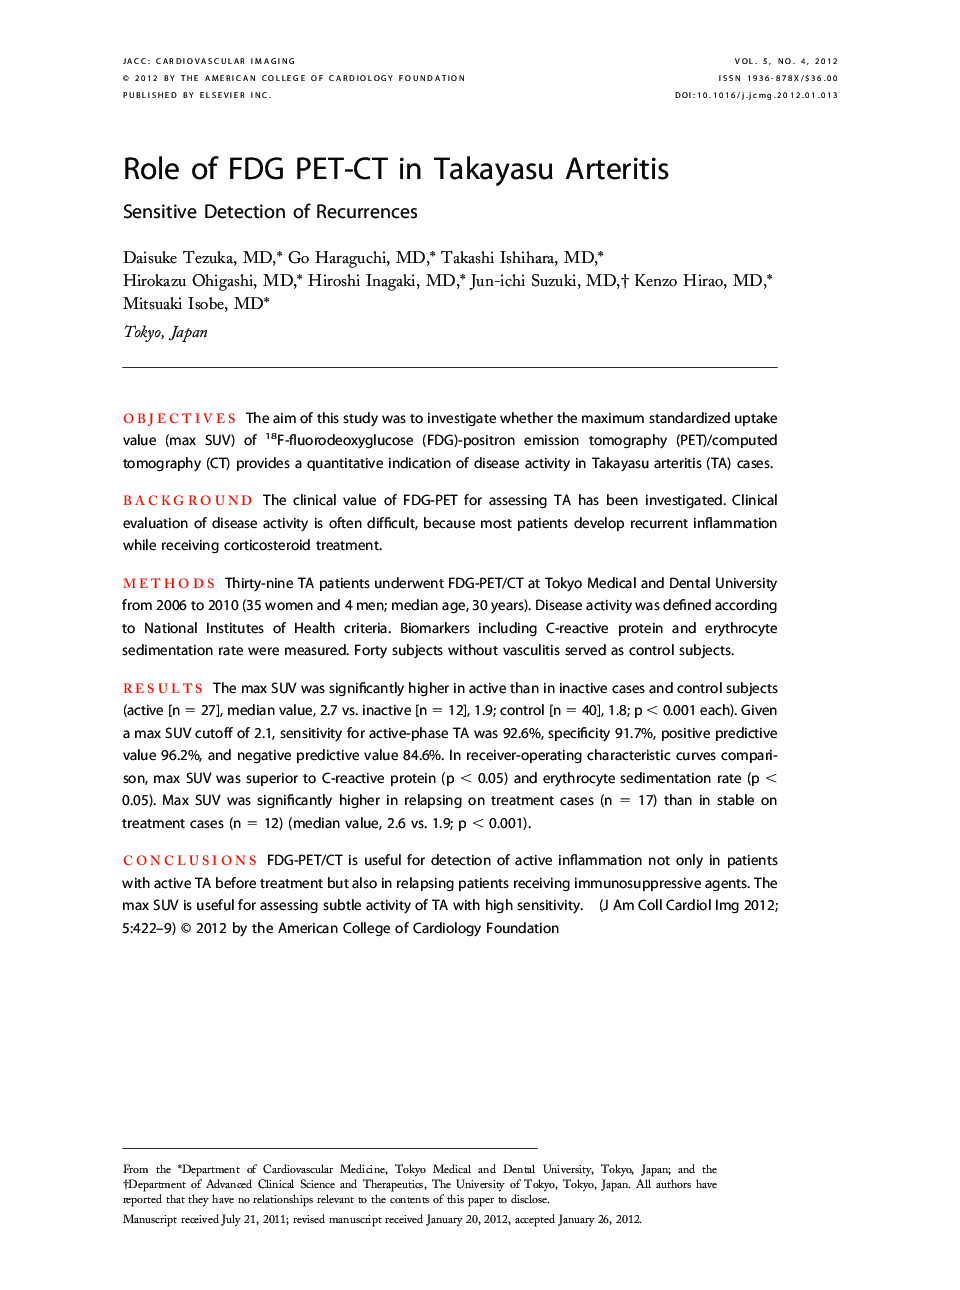 Role of FDG PET-CT in Takayasu Arteritis : Sensitive Detection of Recurrences